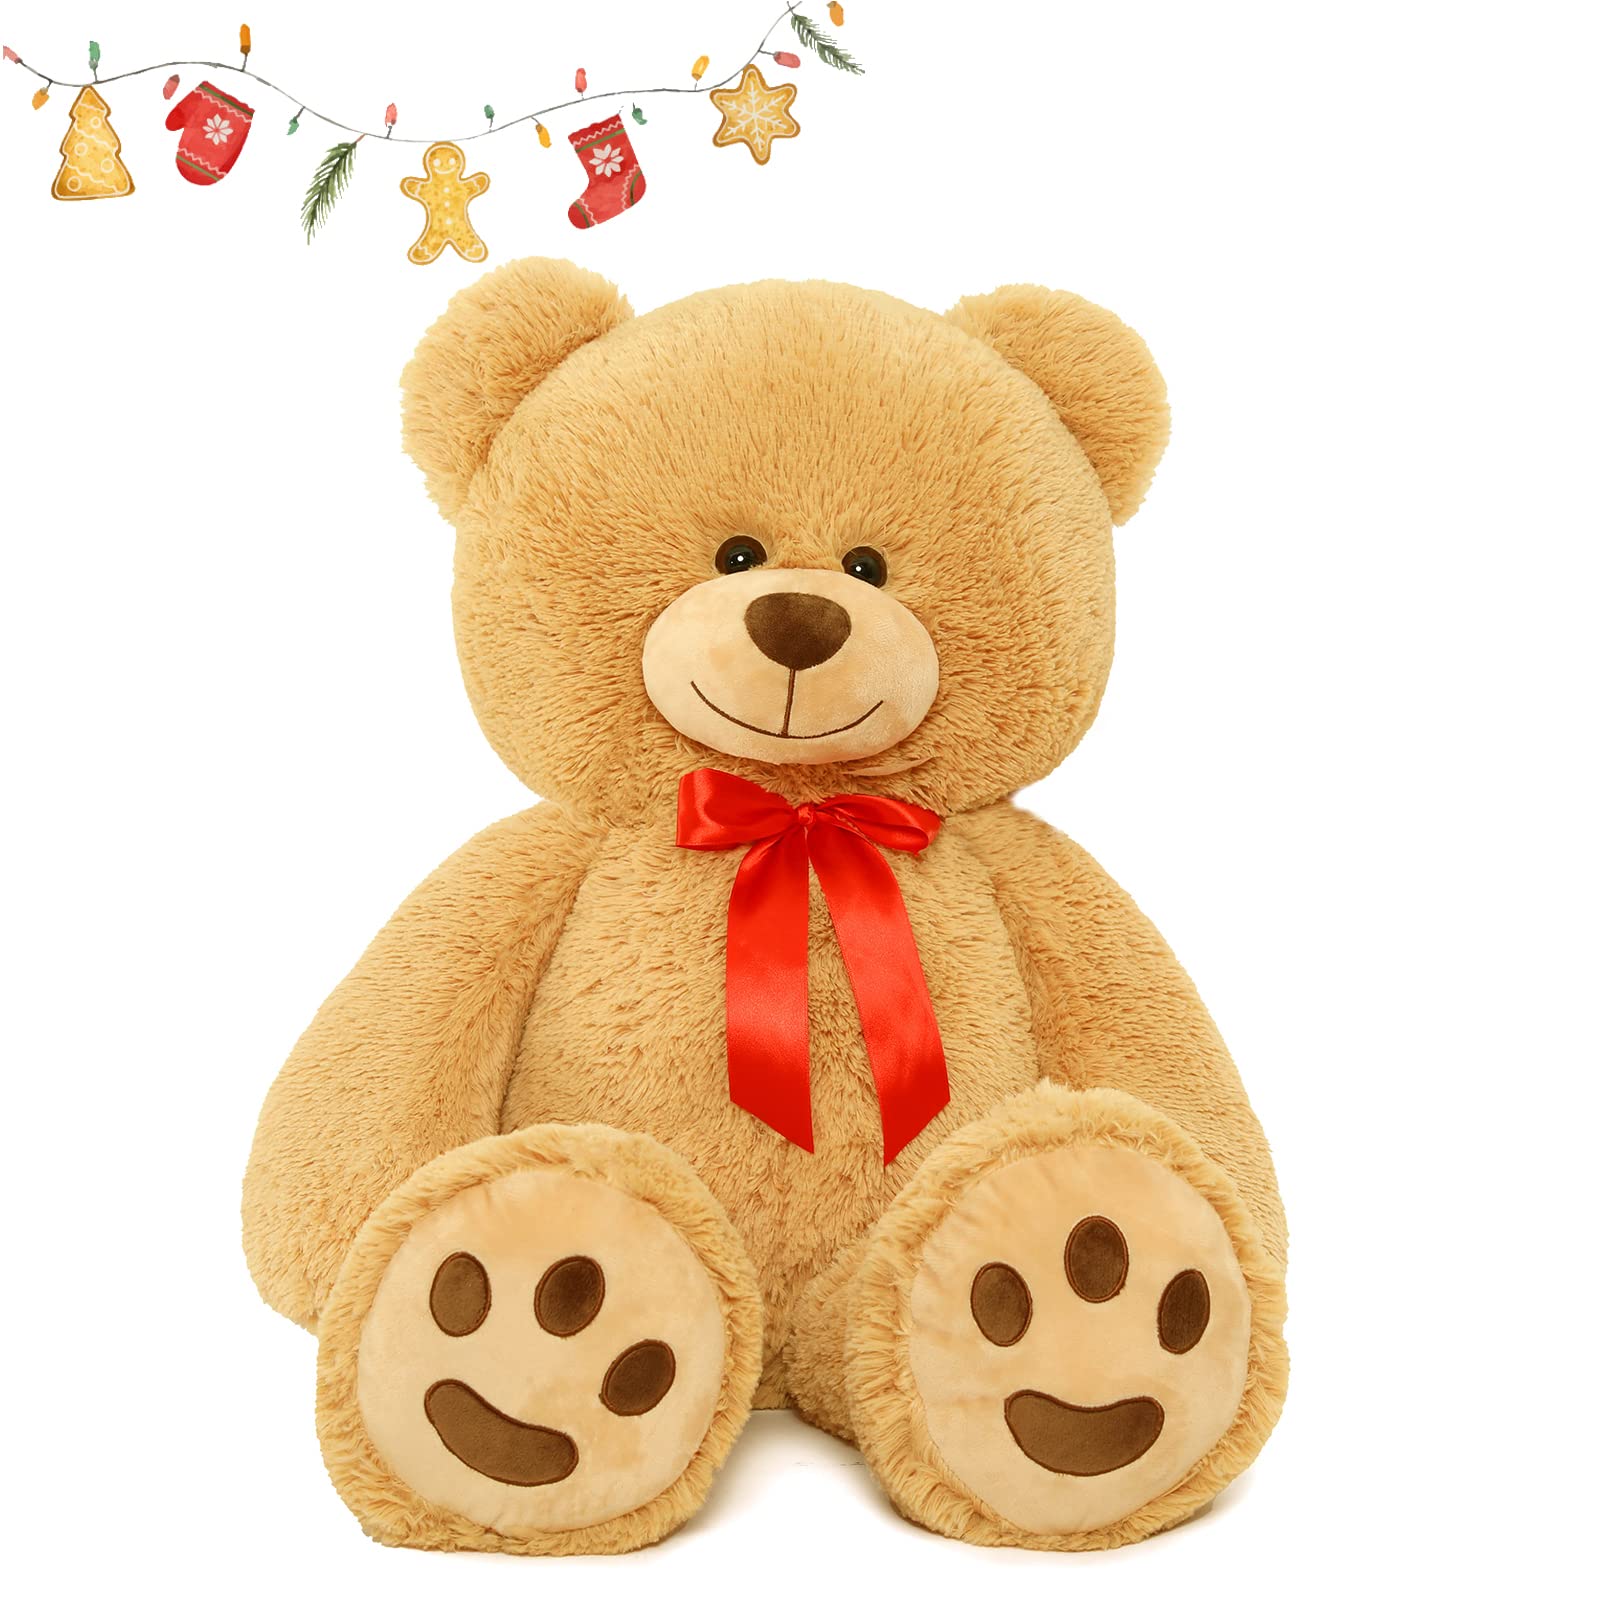 Mua BENINY Giant Teddy Bear Stuffed Animal Plush Toy, Big Brown Teddy Bear  Gift for Kids, Girlfriend, Boyfriend on Christmas, Birthday, Baby Shower  (